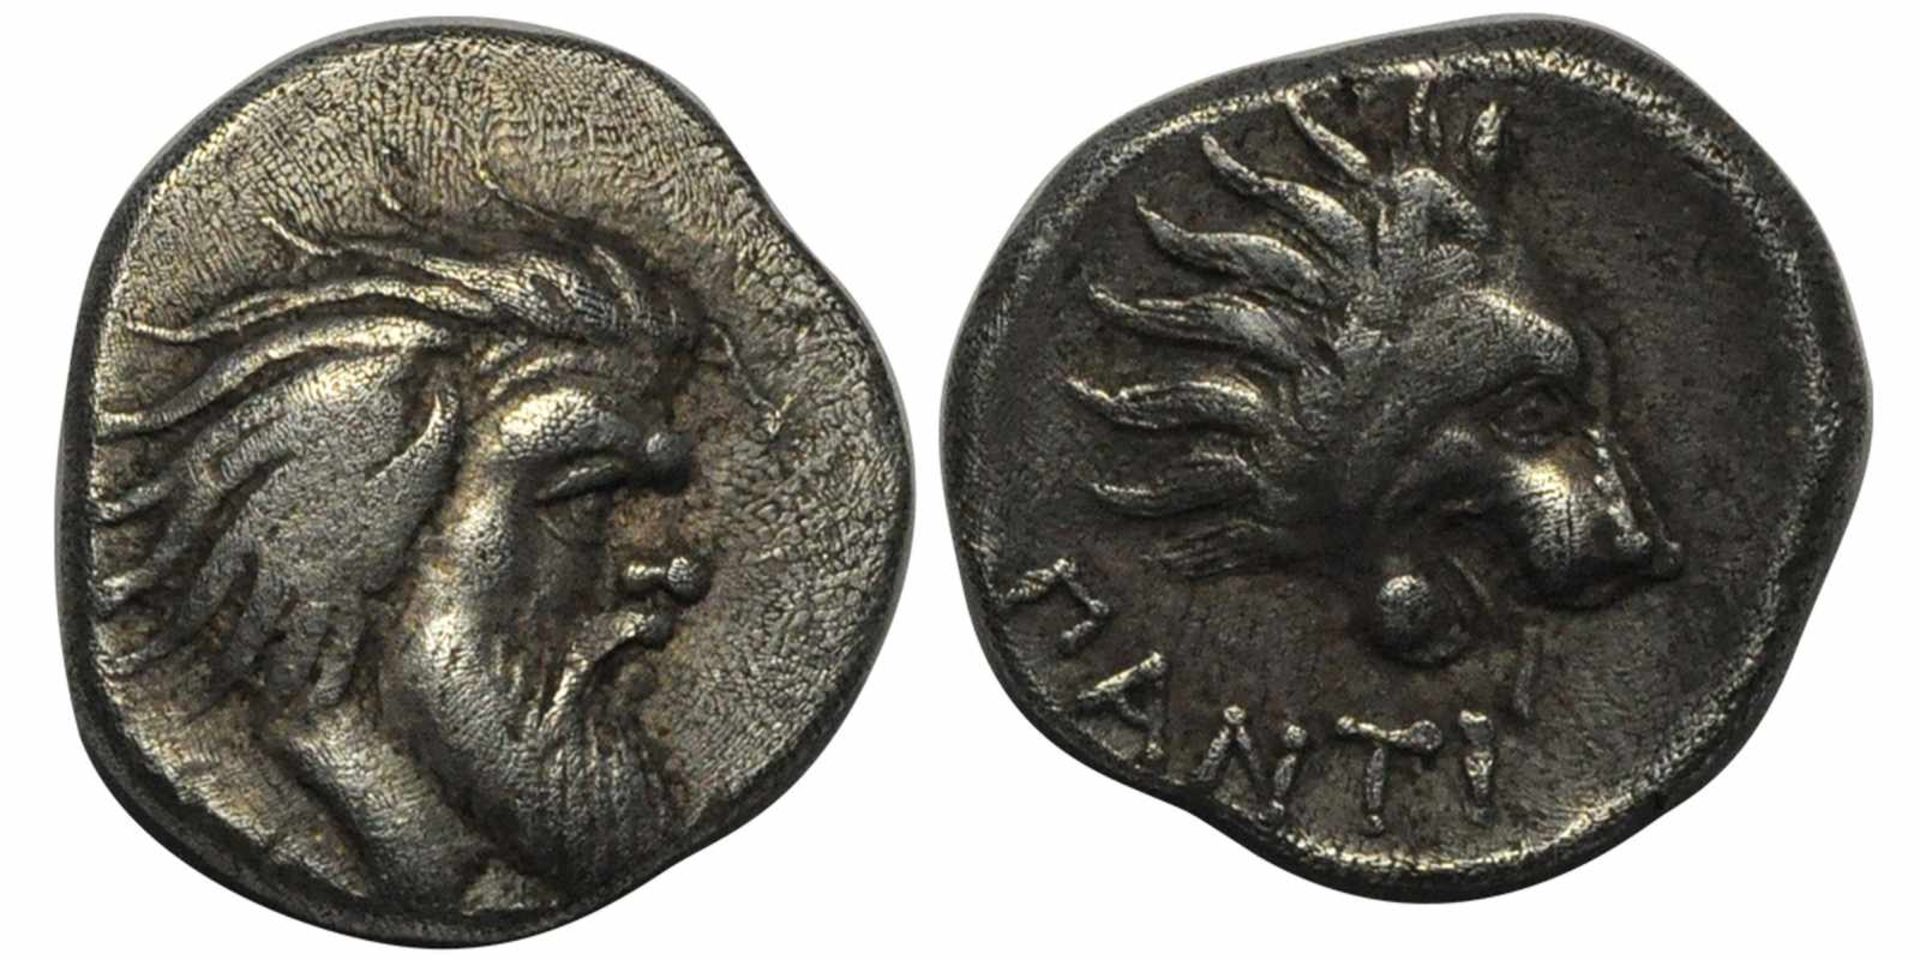 Cimmerian Bosporos, Pantikapaion. Circa 380-370 BC. VFCimmerian Bosporos, Pantikapaion. Circa 380-